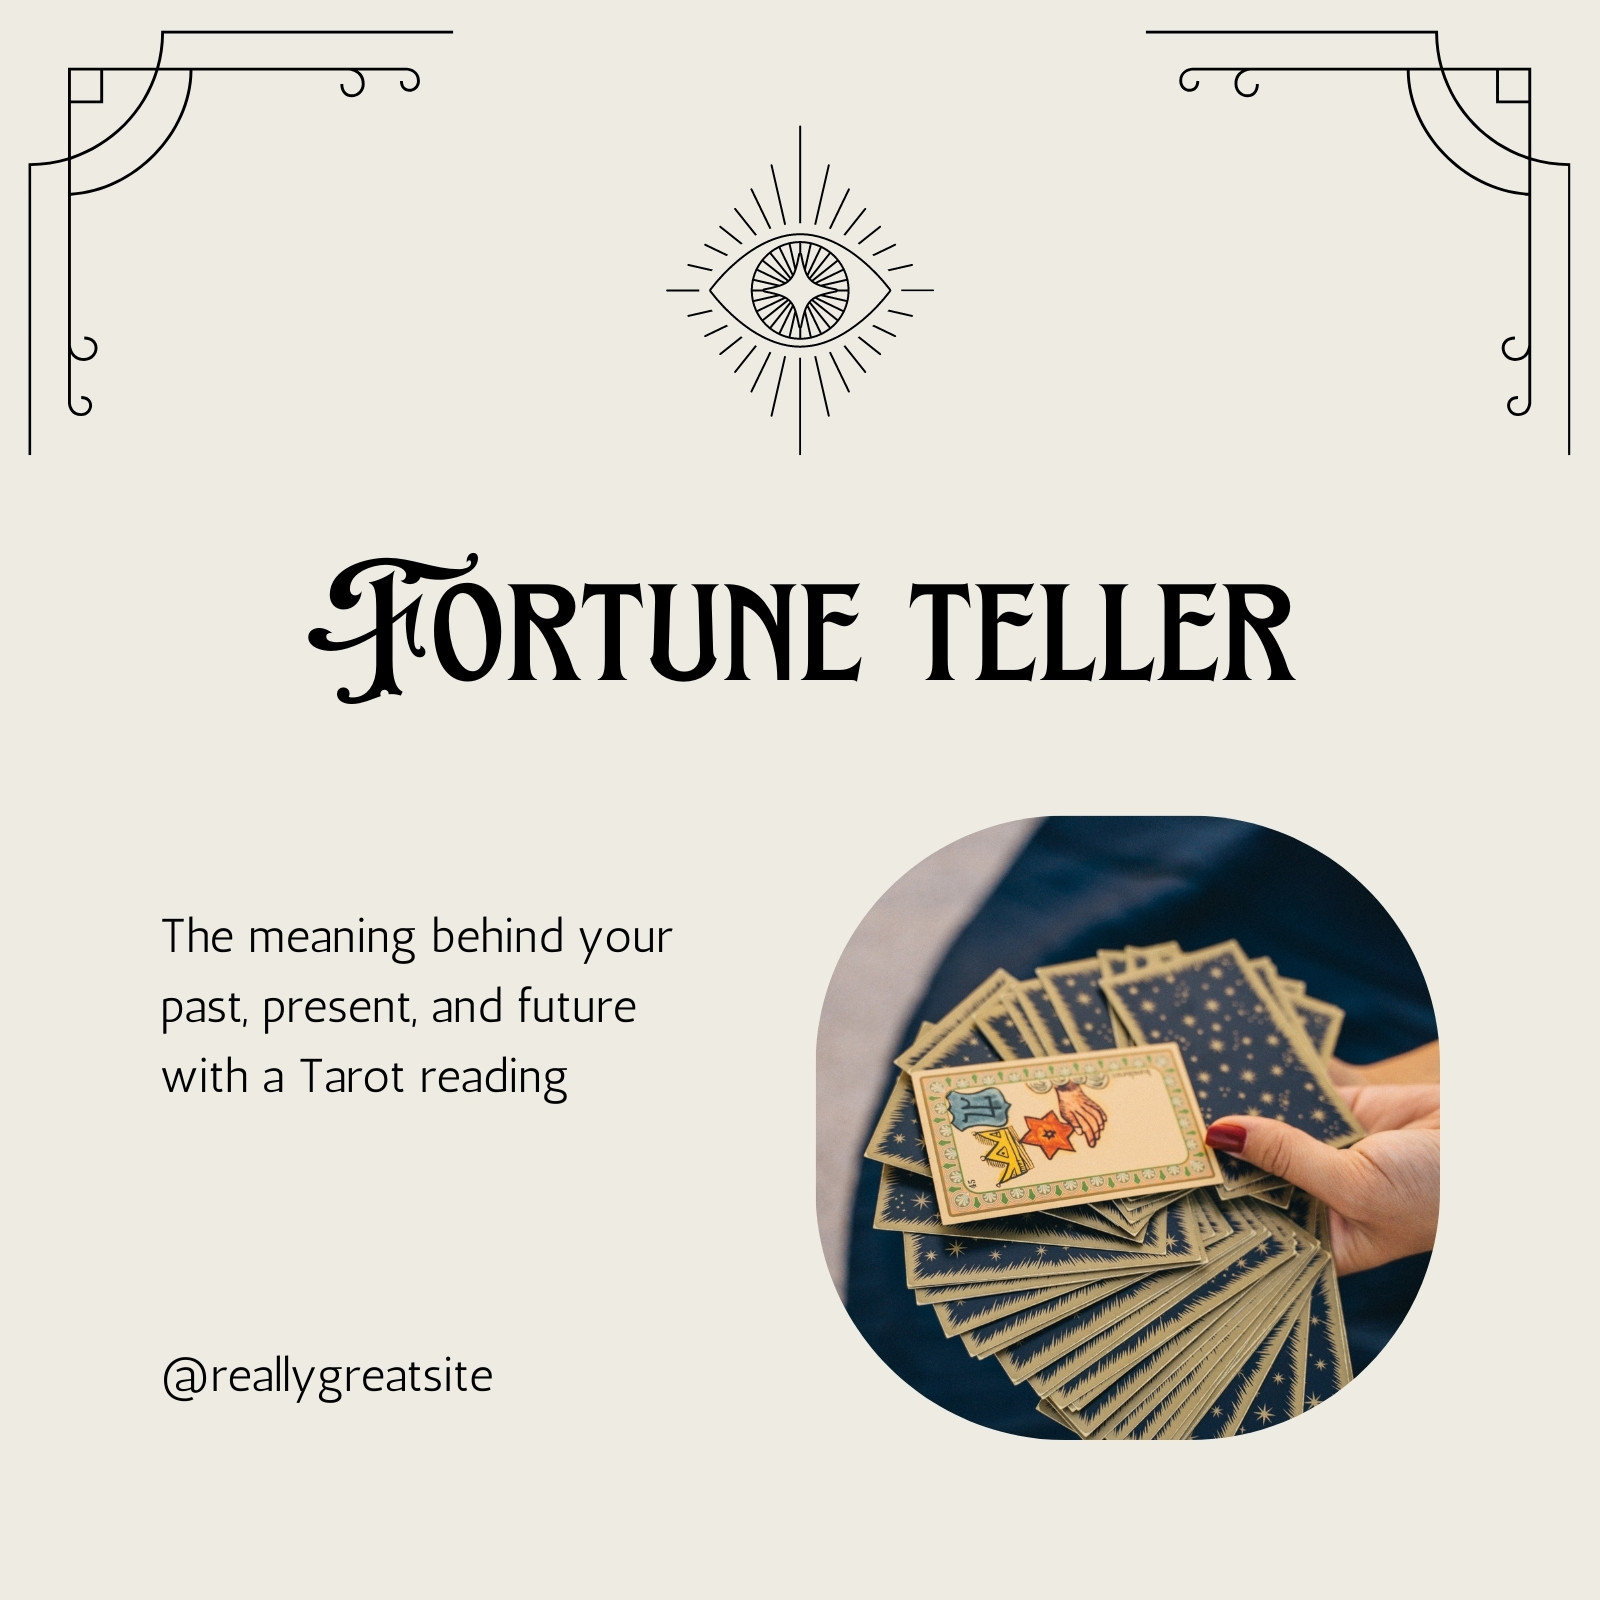 The Moon Tarot Card Gold Spiritual Fortune Telling Digital Art by